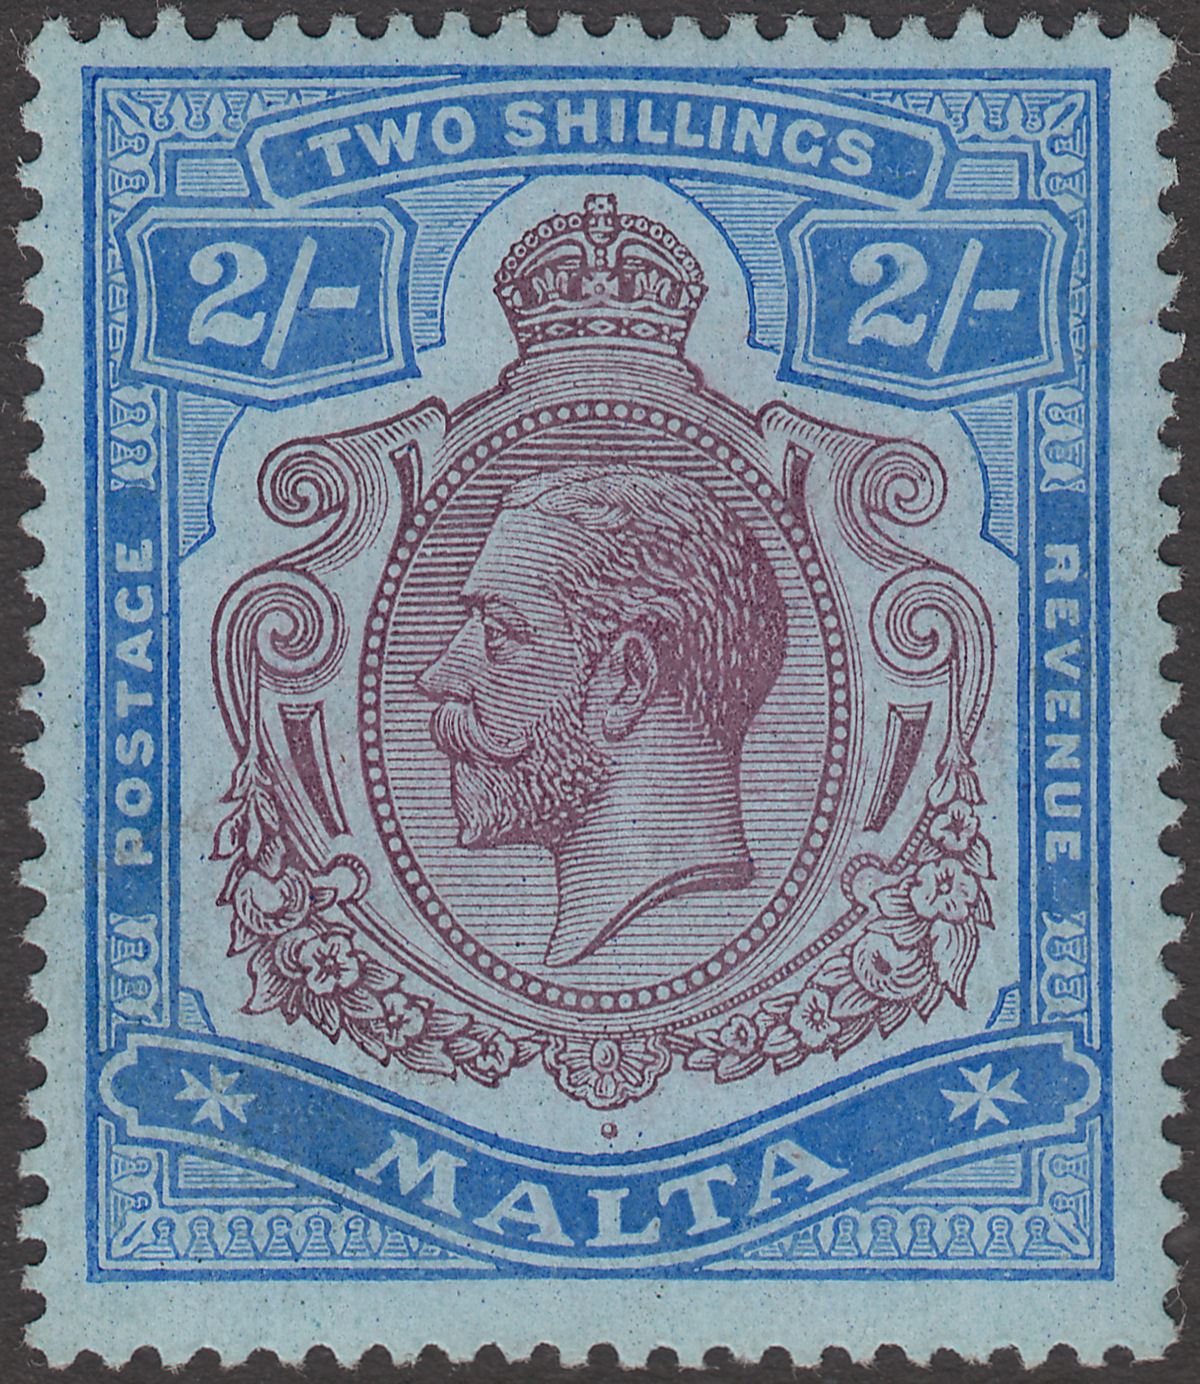 Malta 1914 KGV 2sh Purple and Blue on Blue wmk Multi Crown CA Mint SG86 cat £50